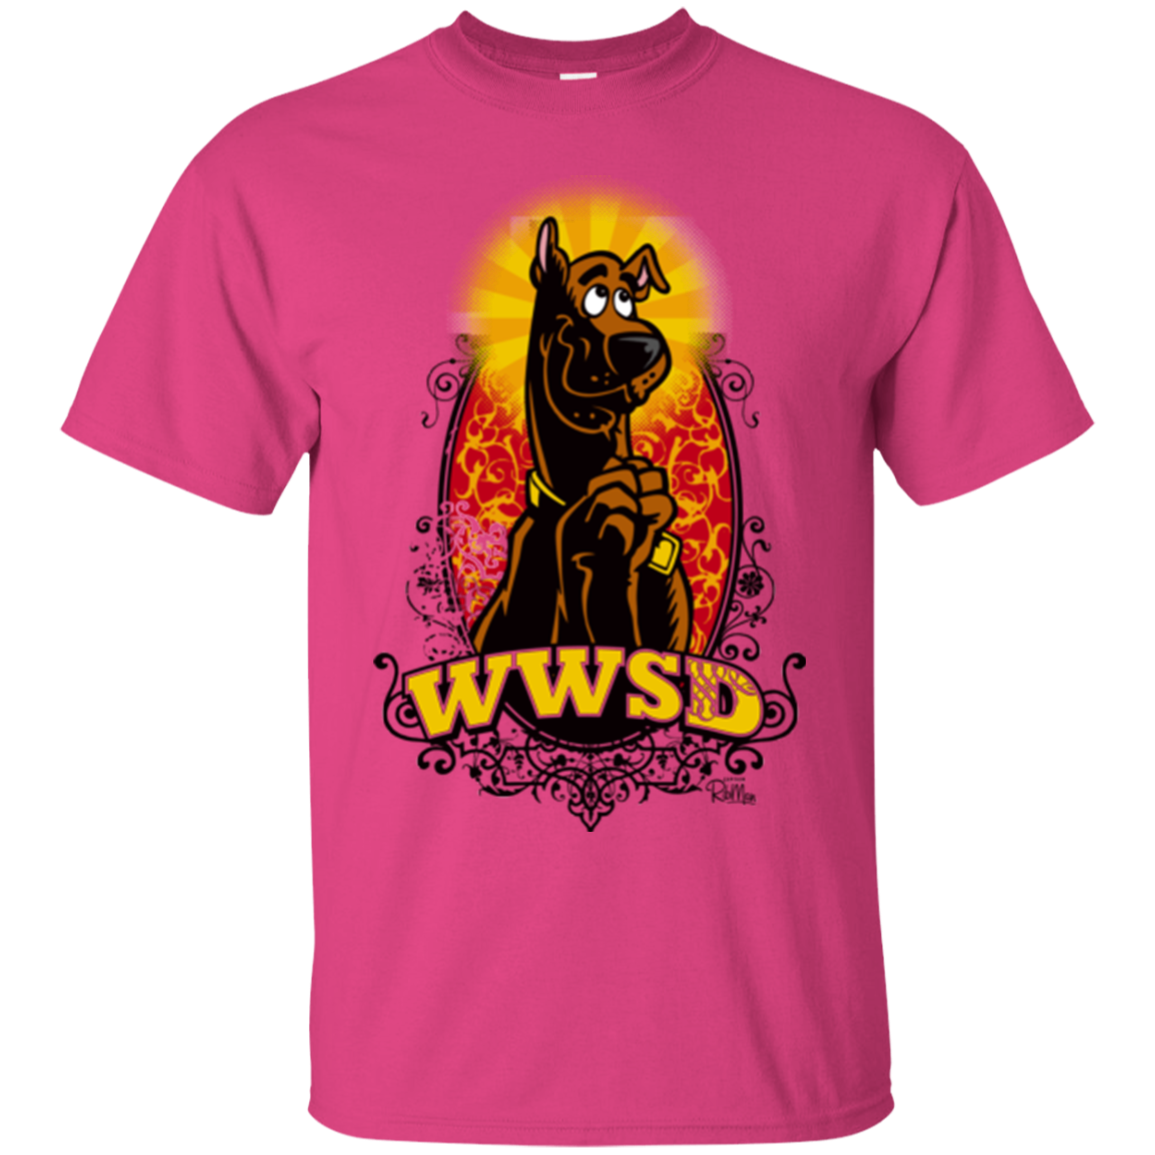 WWSD T-Shirt